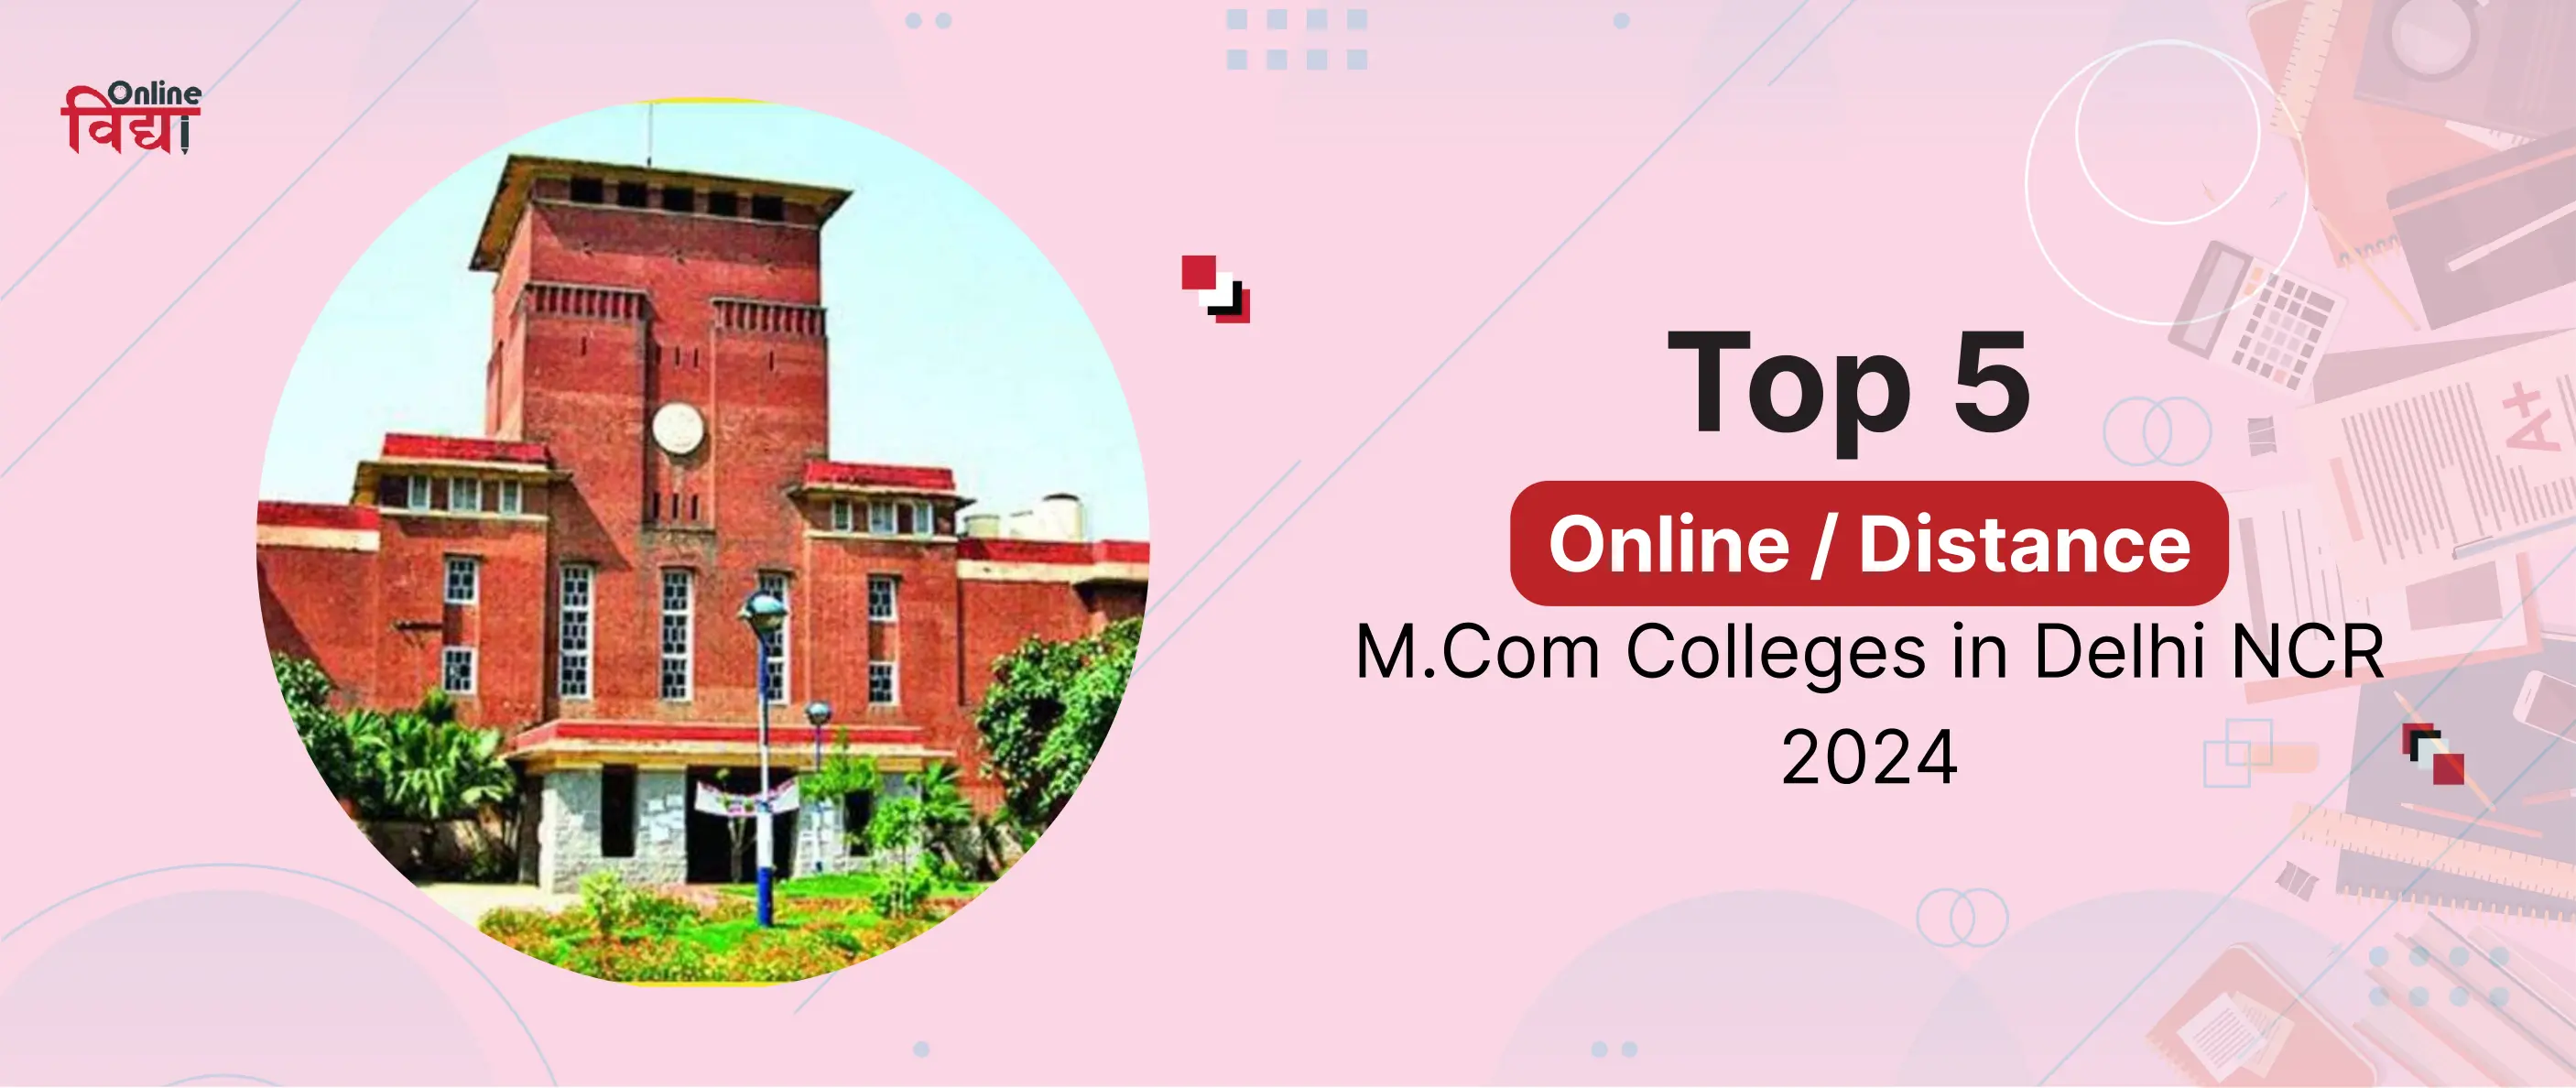 Top 5 Online/Distance M.Com Colleges in Delhi NCR 2024